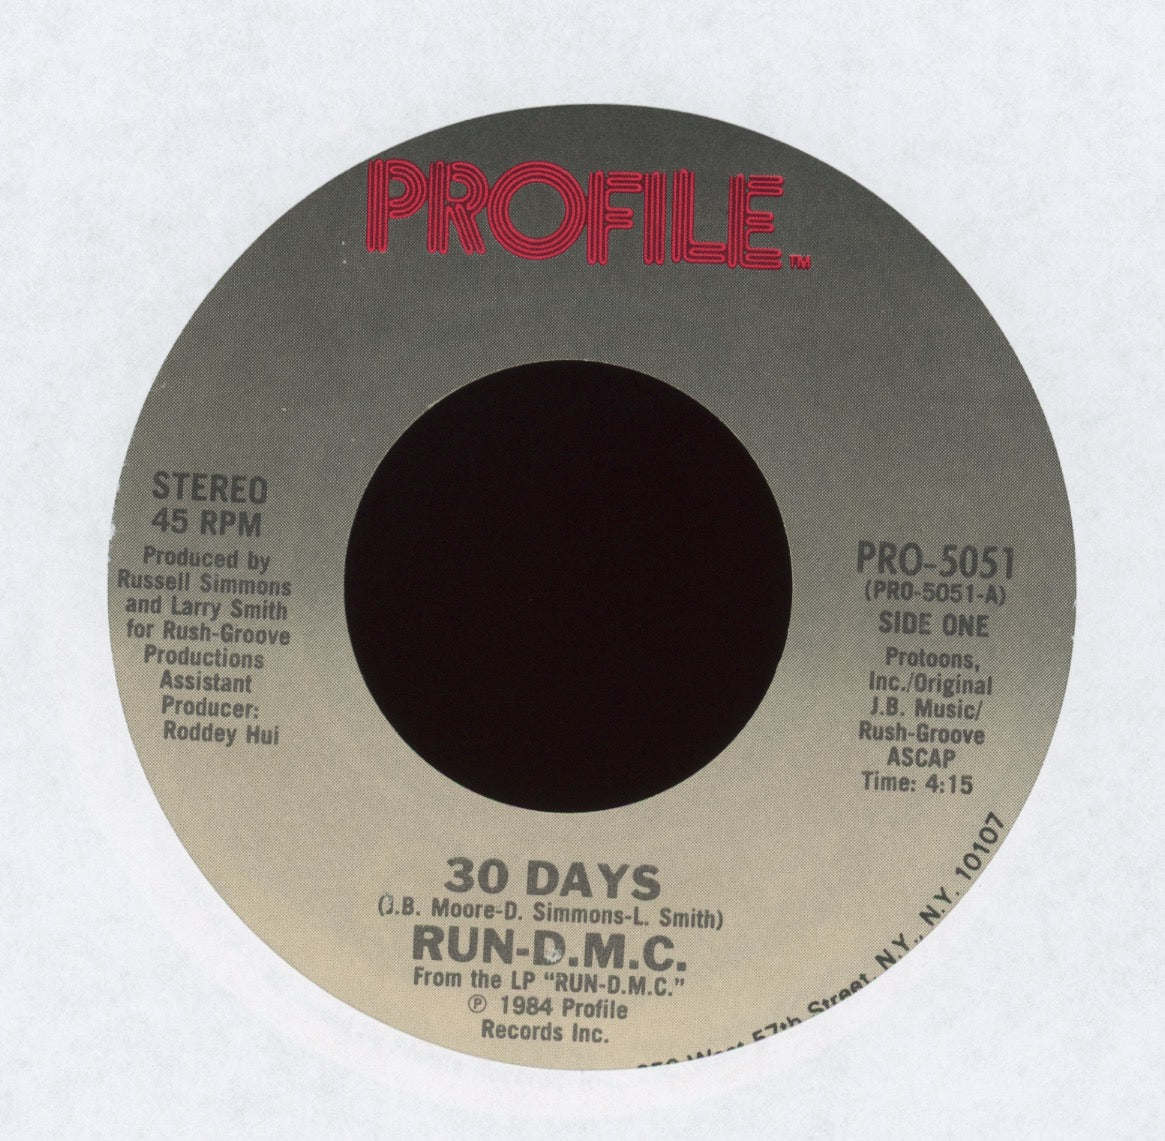 Run-DMC - 30 Days on Profile